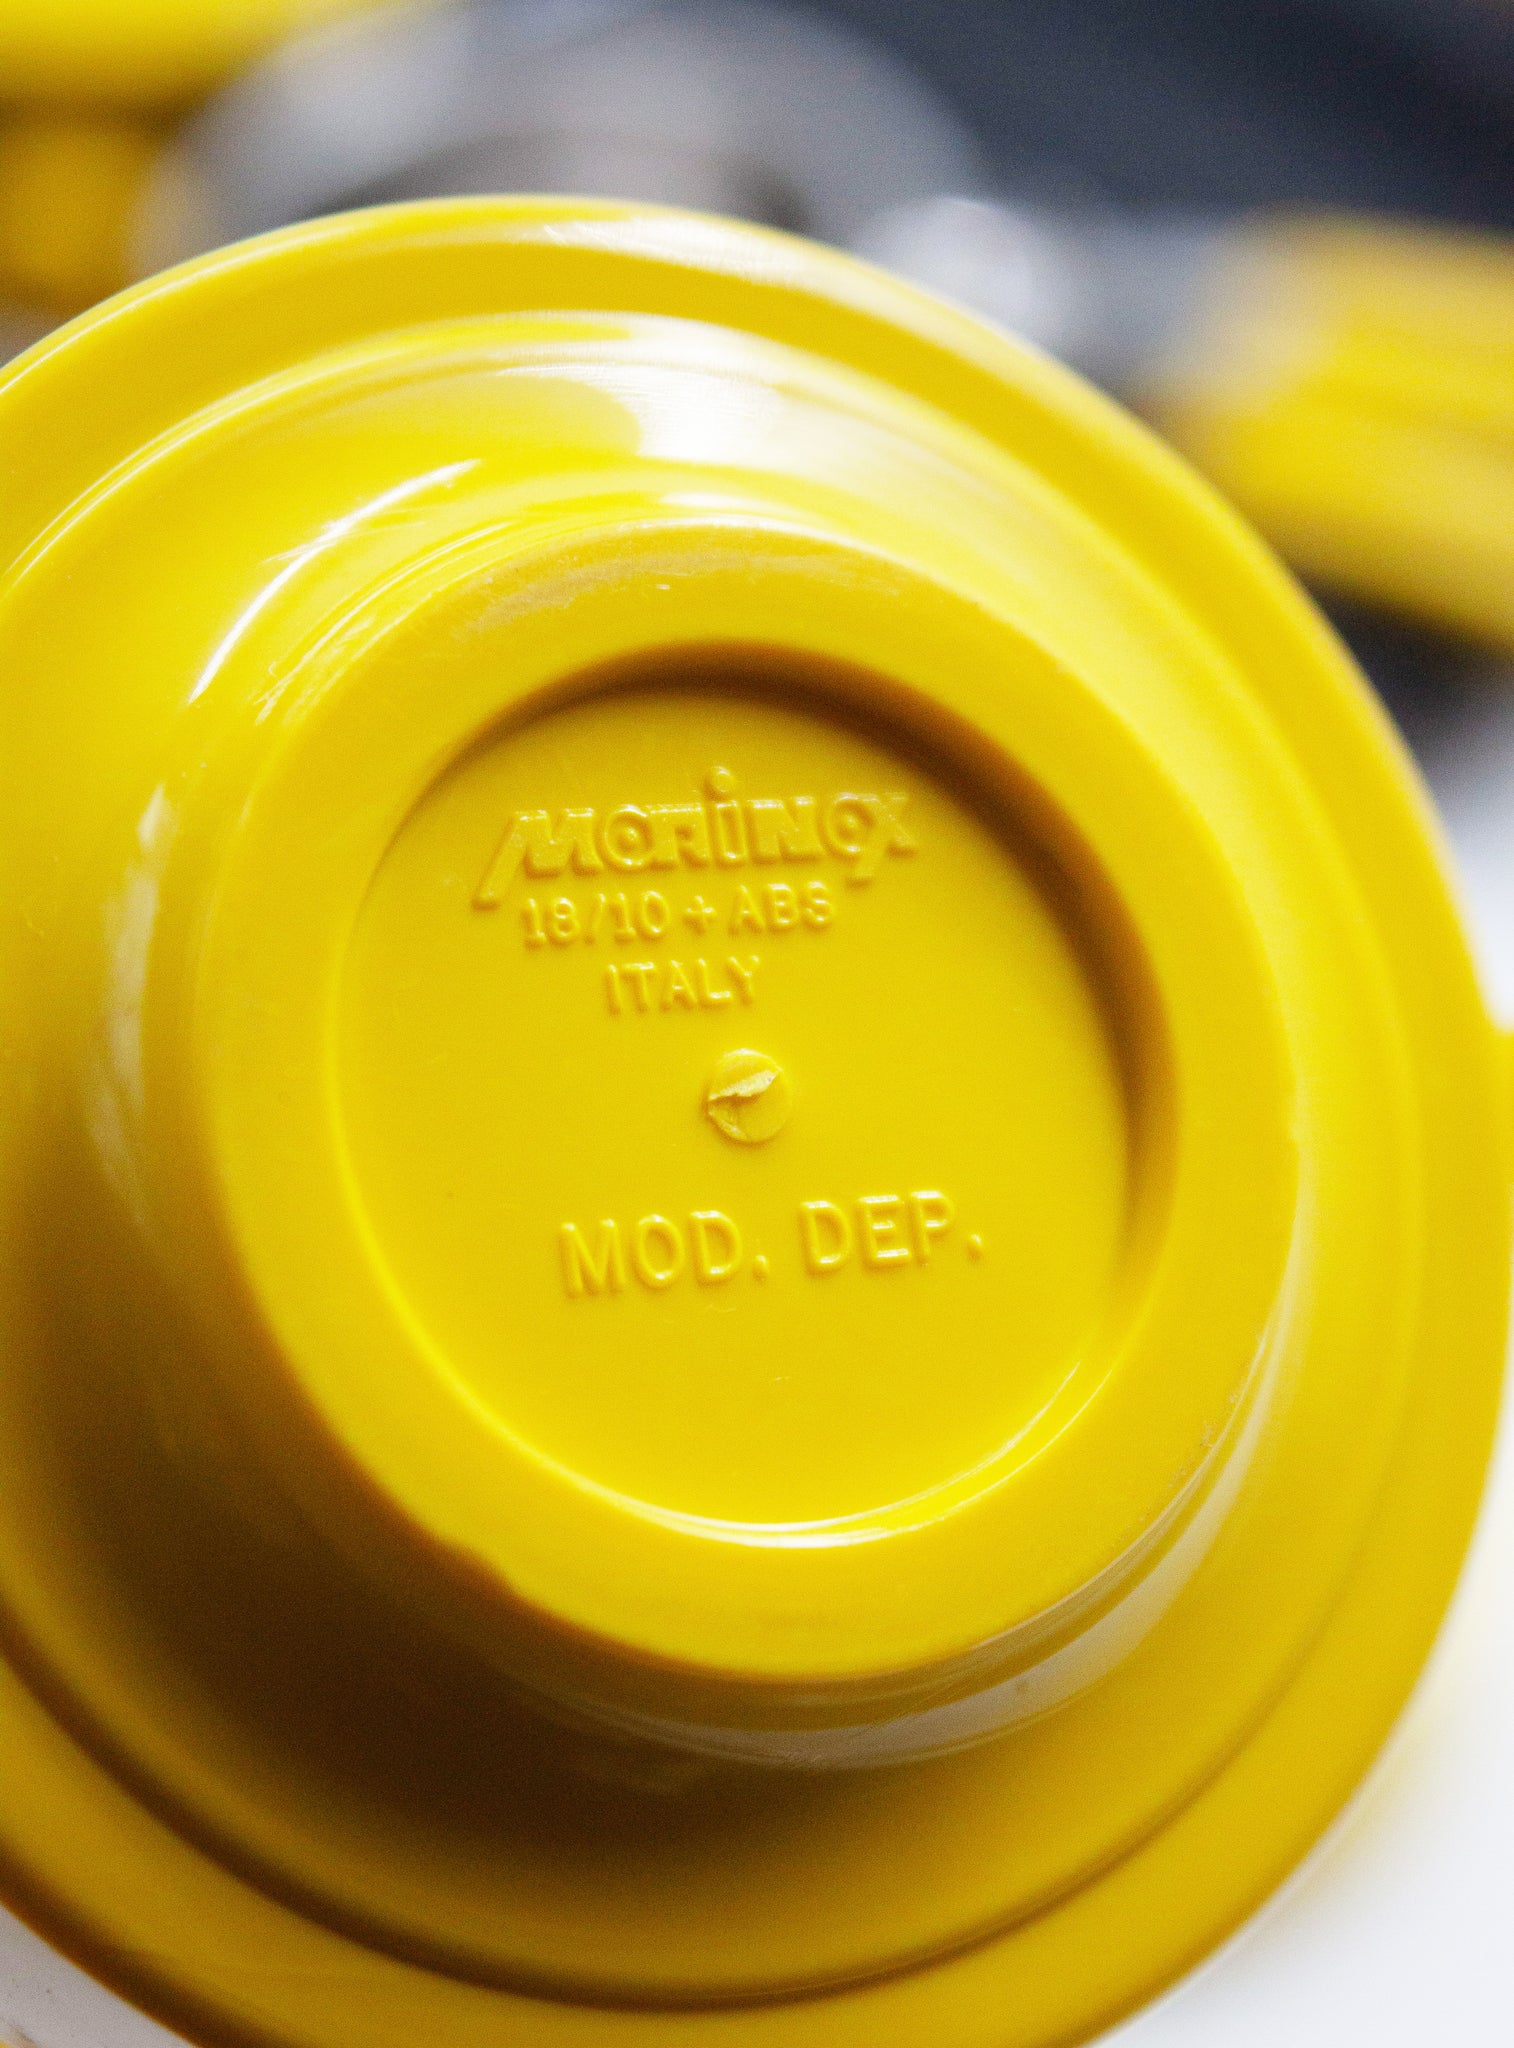 Morinox Italy Stainless Steel Espresso Set (Yellow)